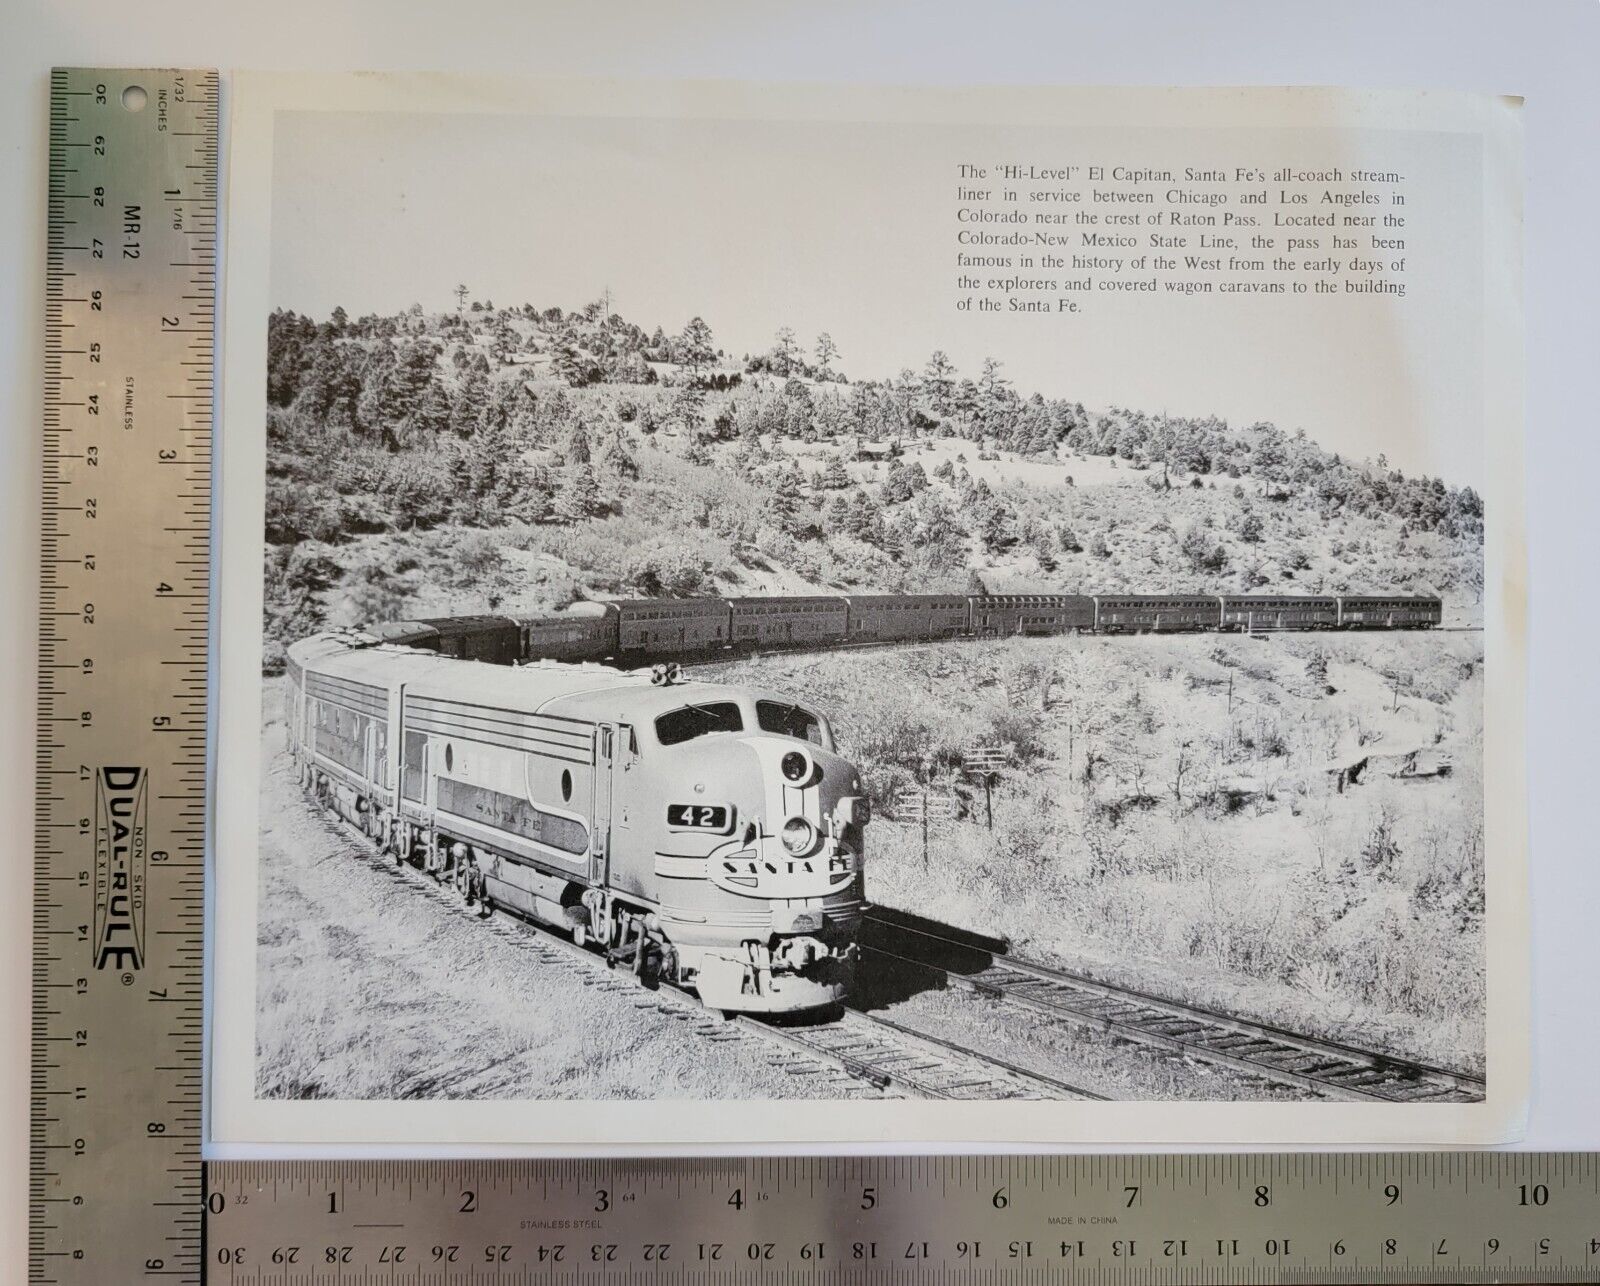 Vintage High Level El Capitan Santa Fe's all-coach Streamliner Railroad Photo